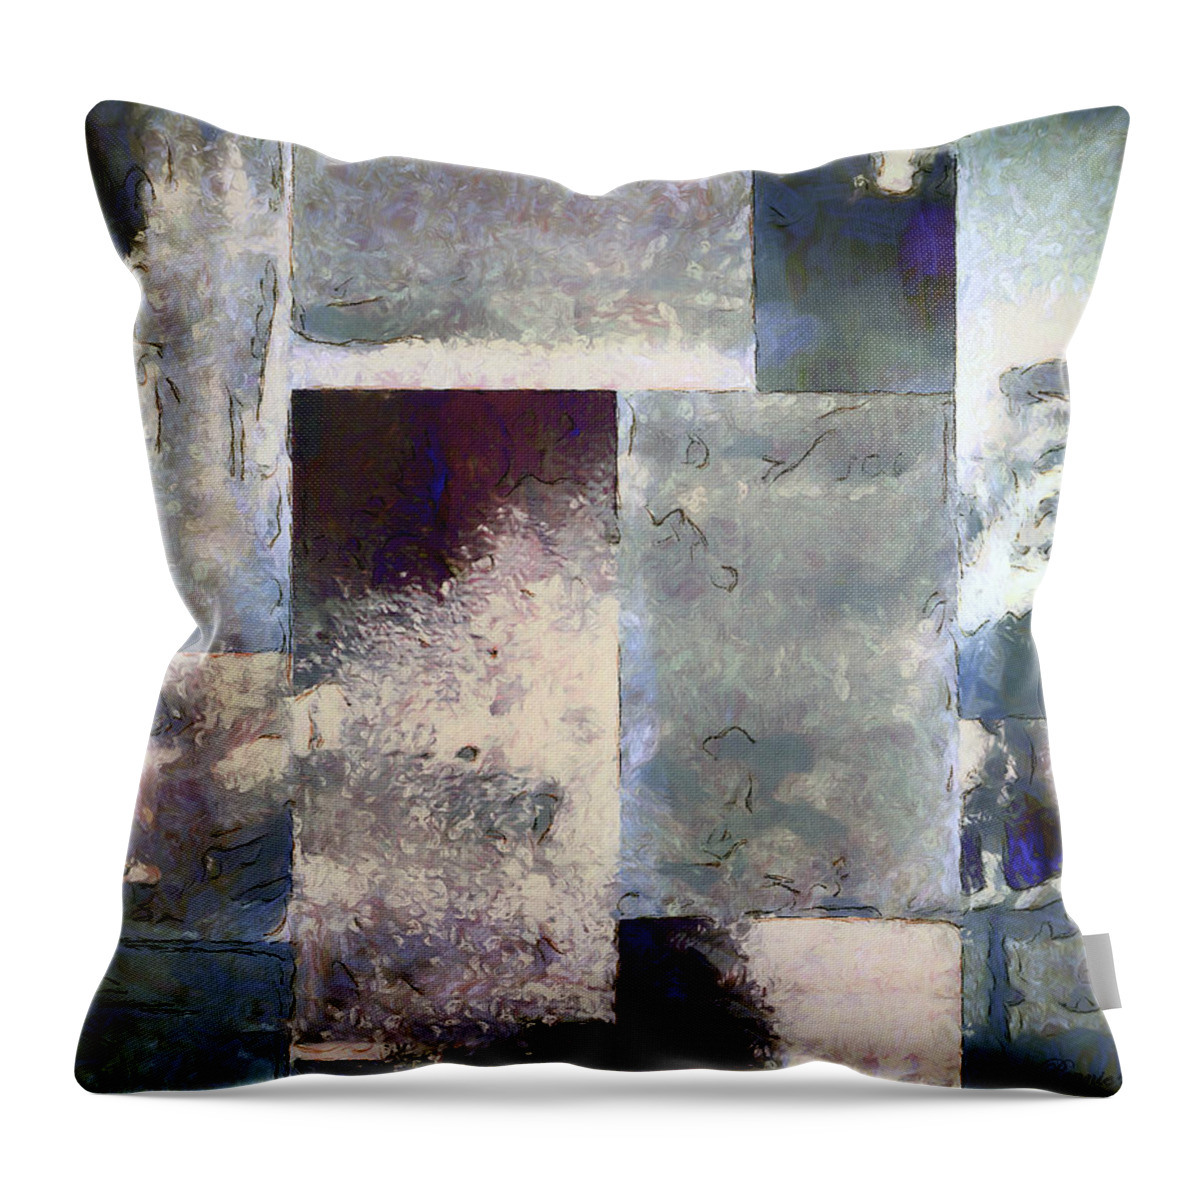 Geometric Shapes Throw Pillow featuring the digital art Blocks by Pennie McCracken